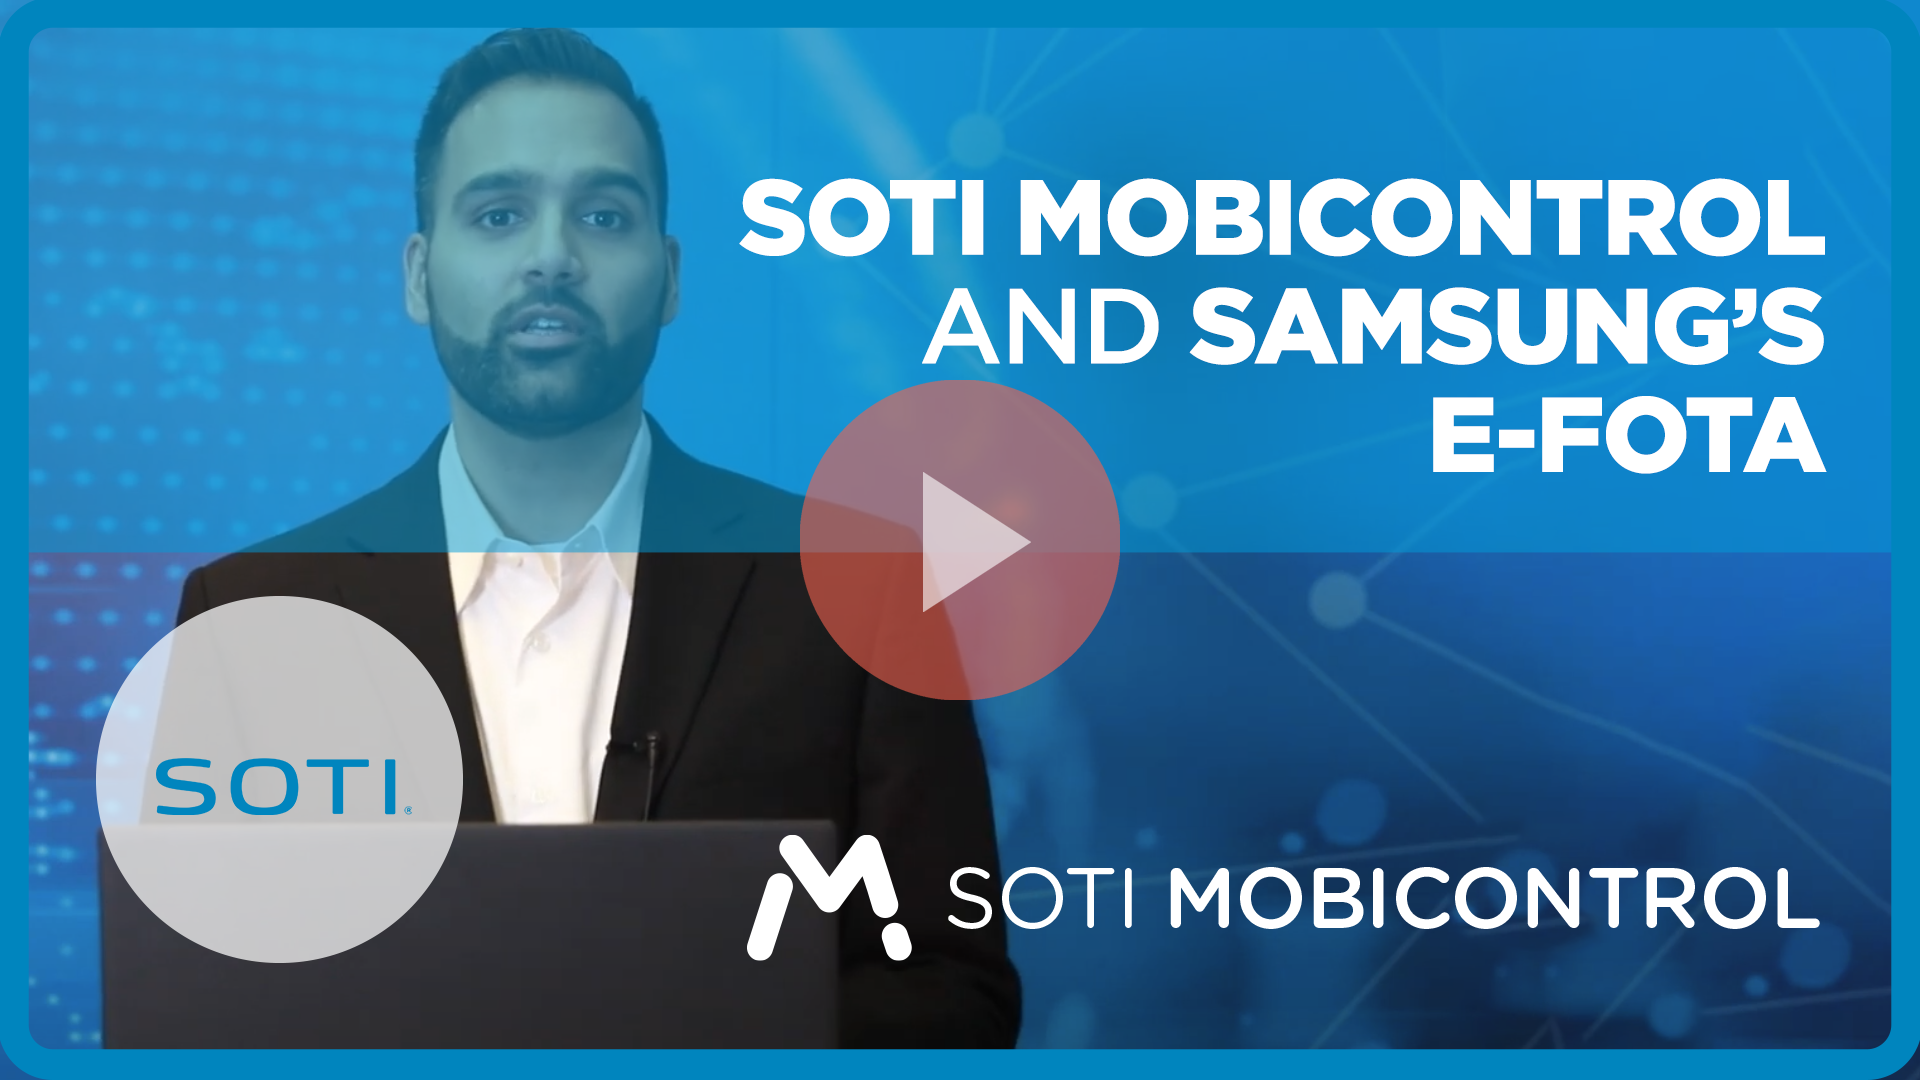 Video on SOTI MobiControl and Samsung's E-FOTA